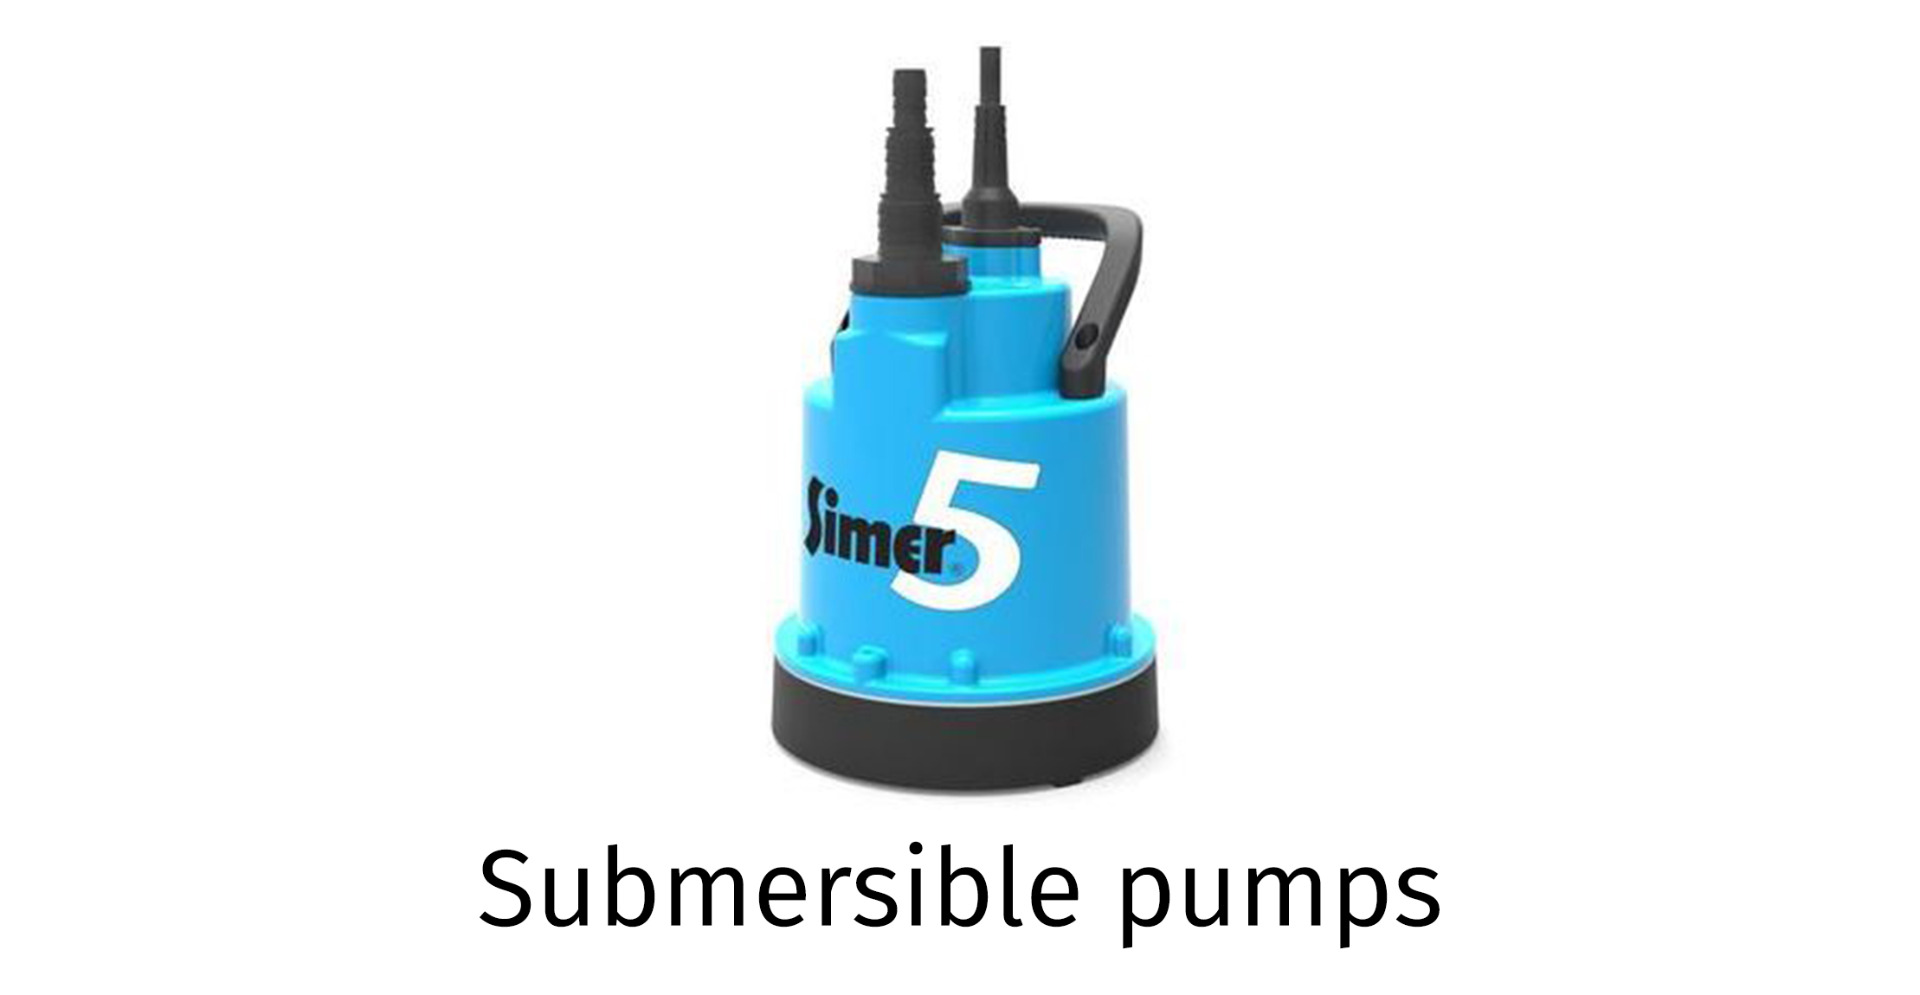 Submersible pumps